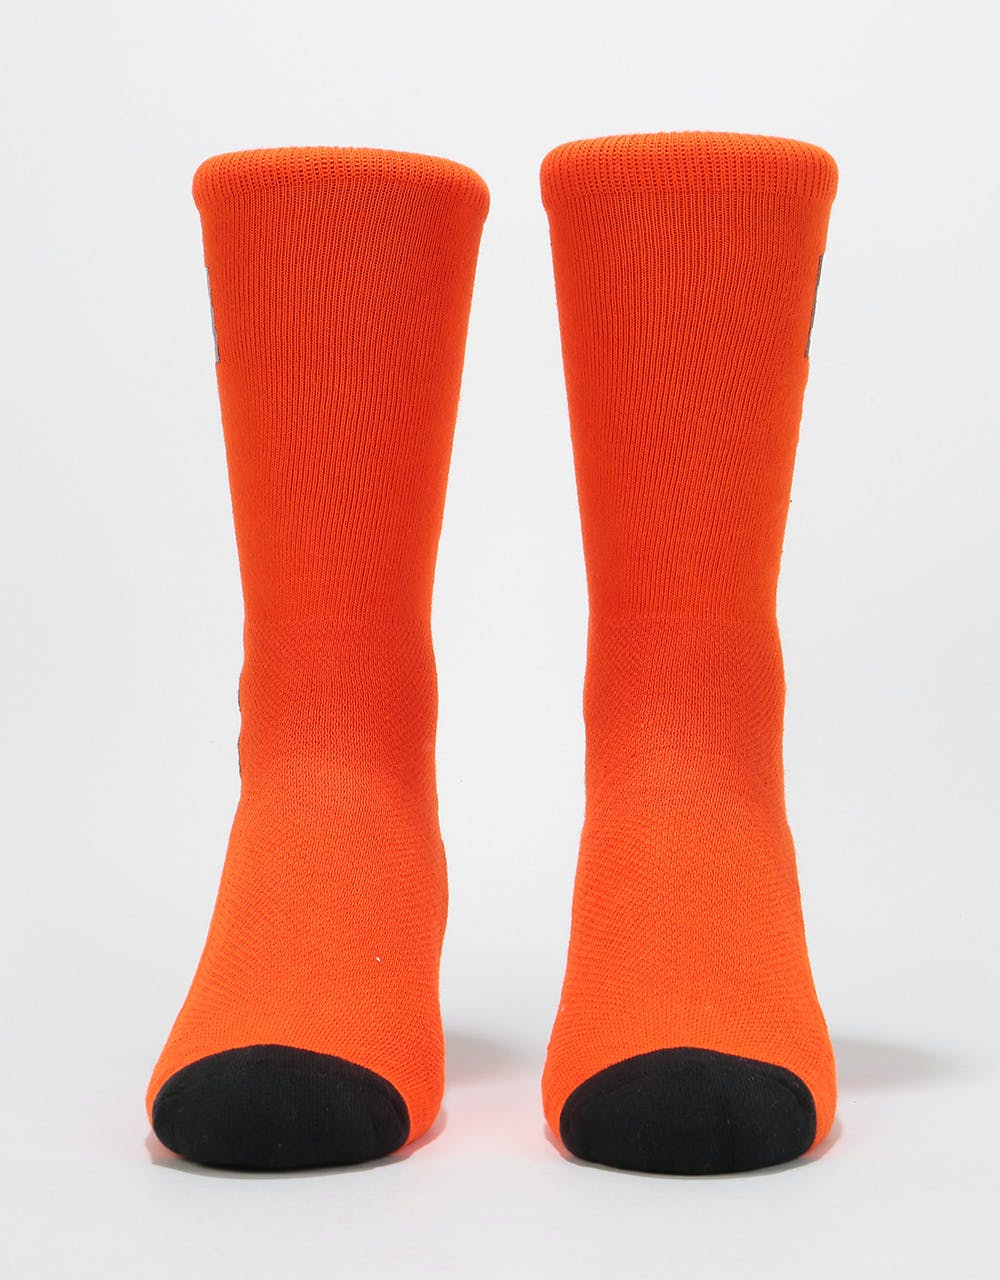 Adidas BB Socks - Collegiate Orange/Core Heather